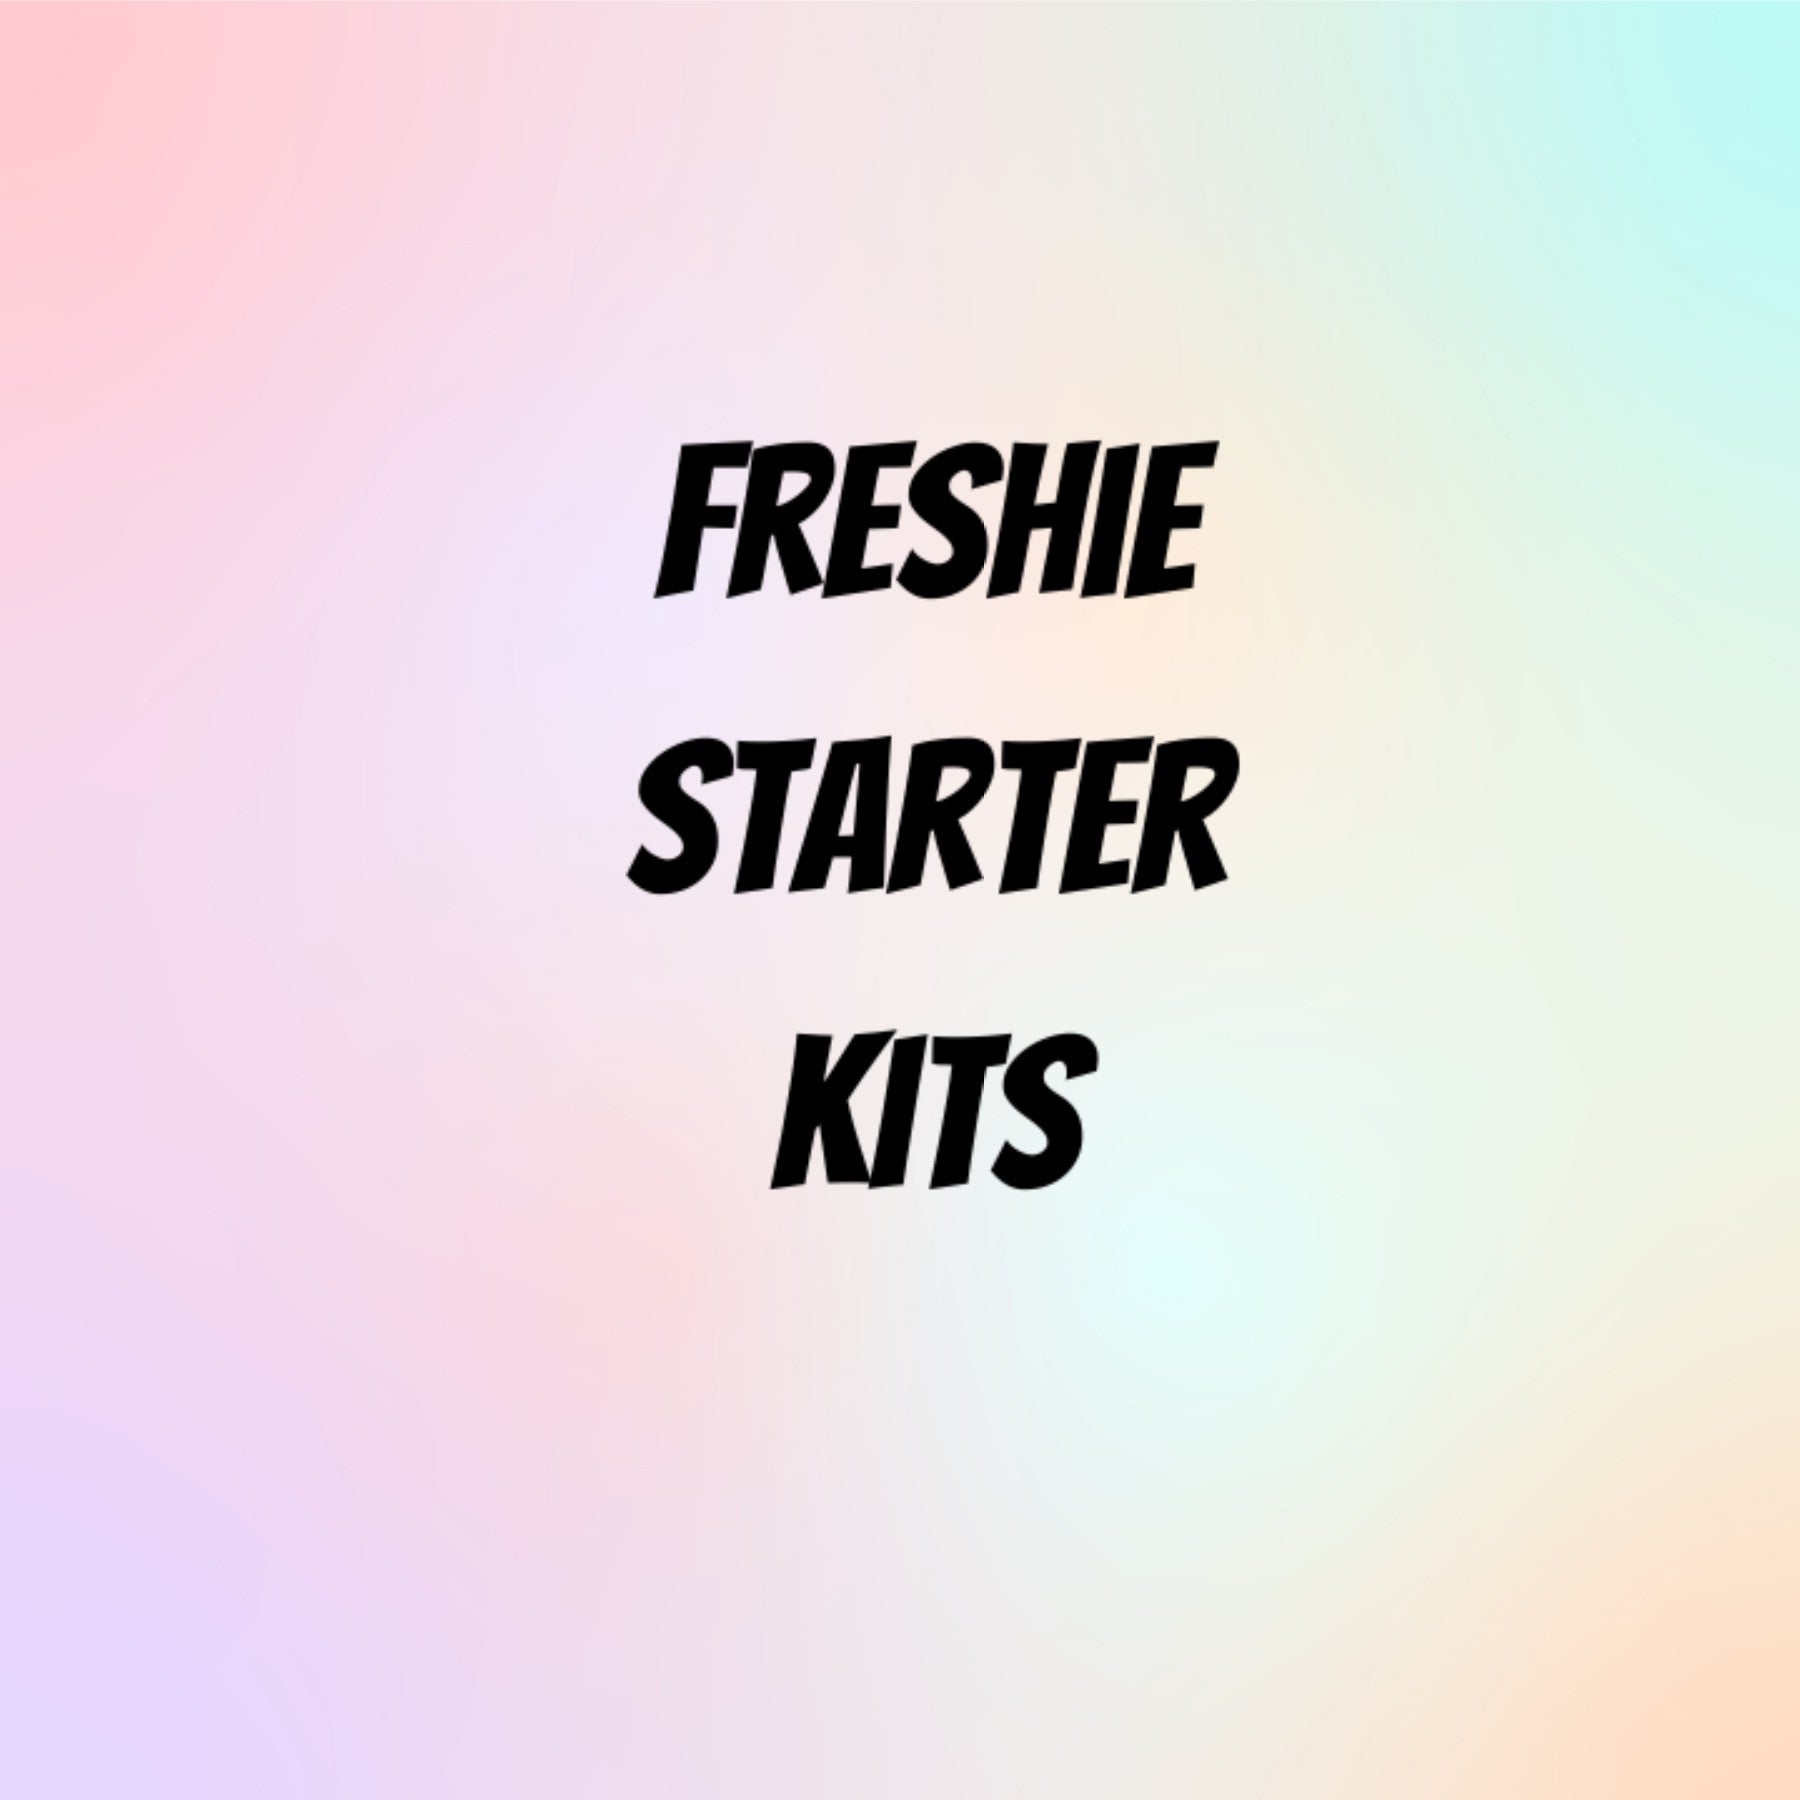 Freshie Starter Kits – Frazier's Little Shoppe